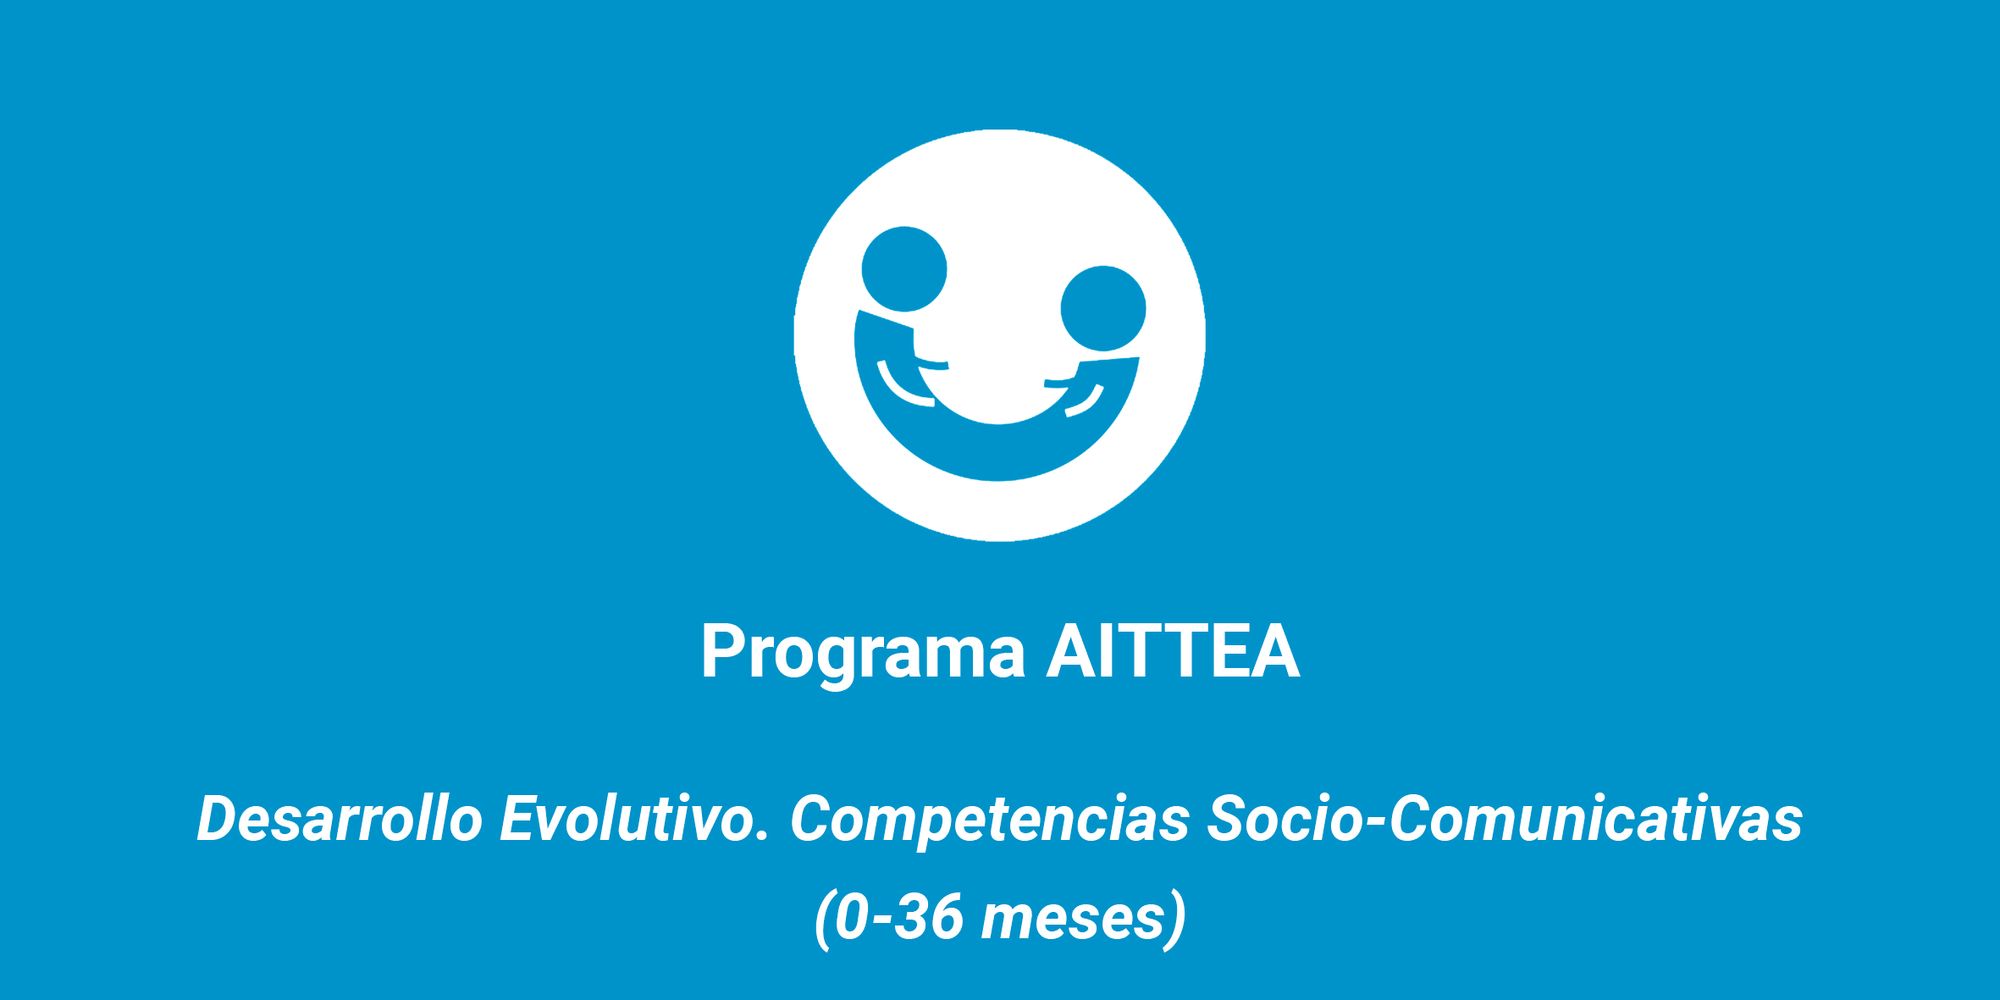 Desarrollo Evolutivo. Competencia Socio-Comunicativas (0-36 meses) (AITTEA)